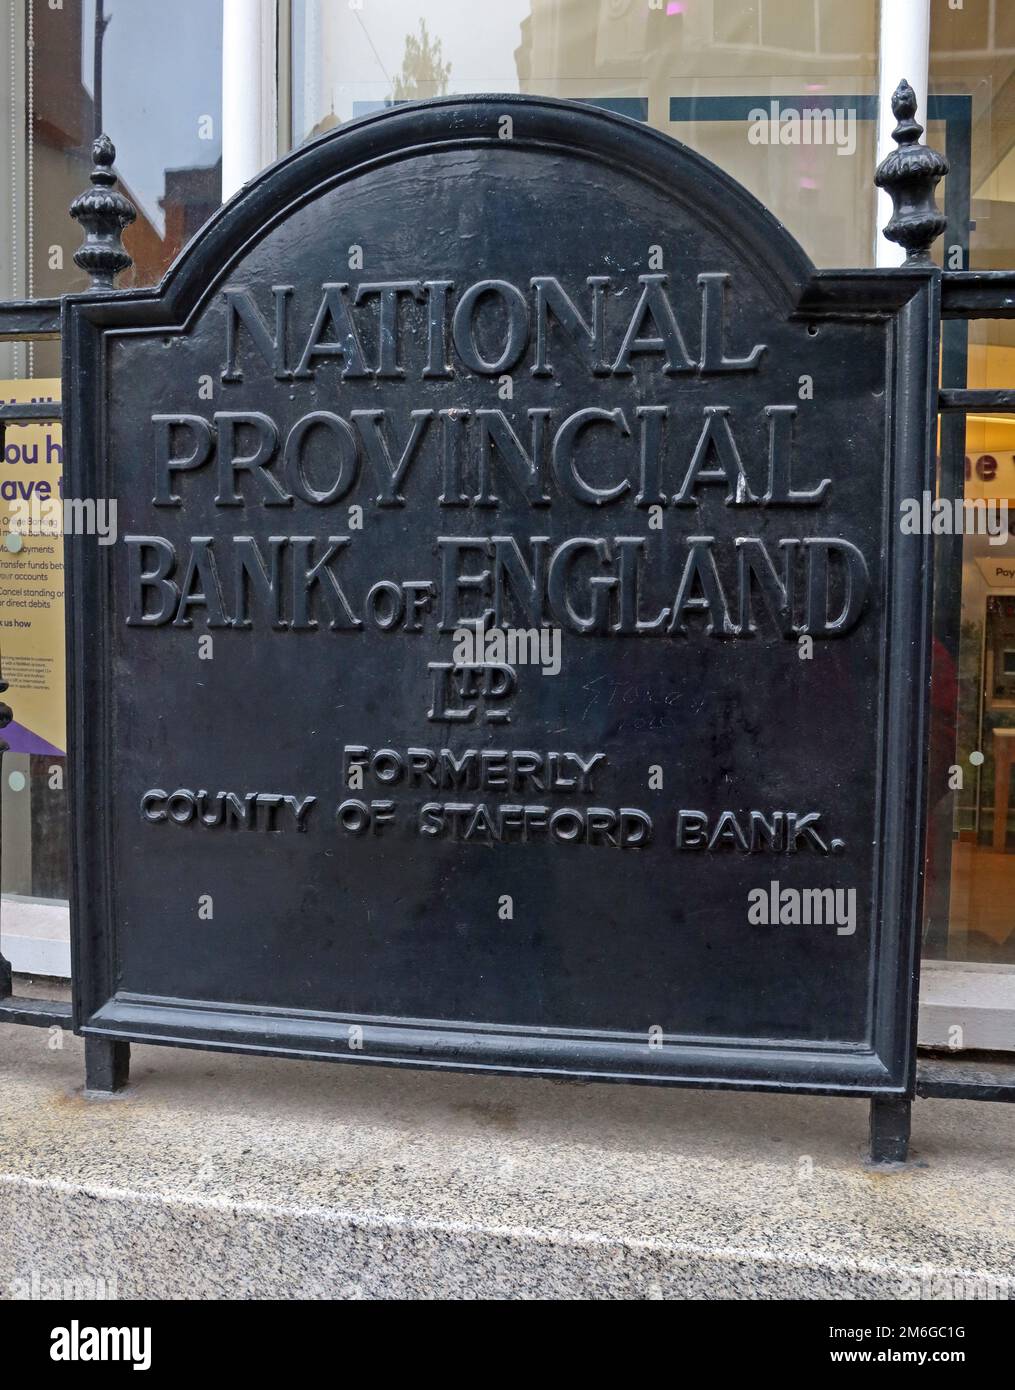 Segno che mostra National Provincial Bank England, ex contea di Stafford Bank (NatWest), Queen Square, Wolverhampton, Inghilterra, WV1 1TL Foto Stock